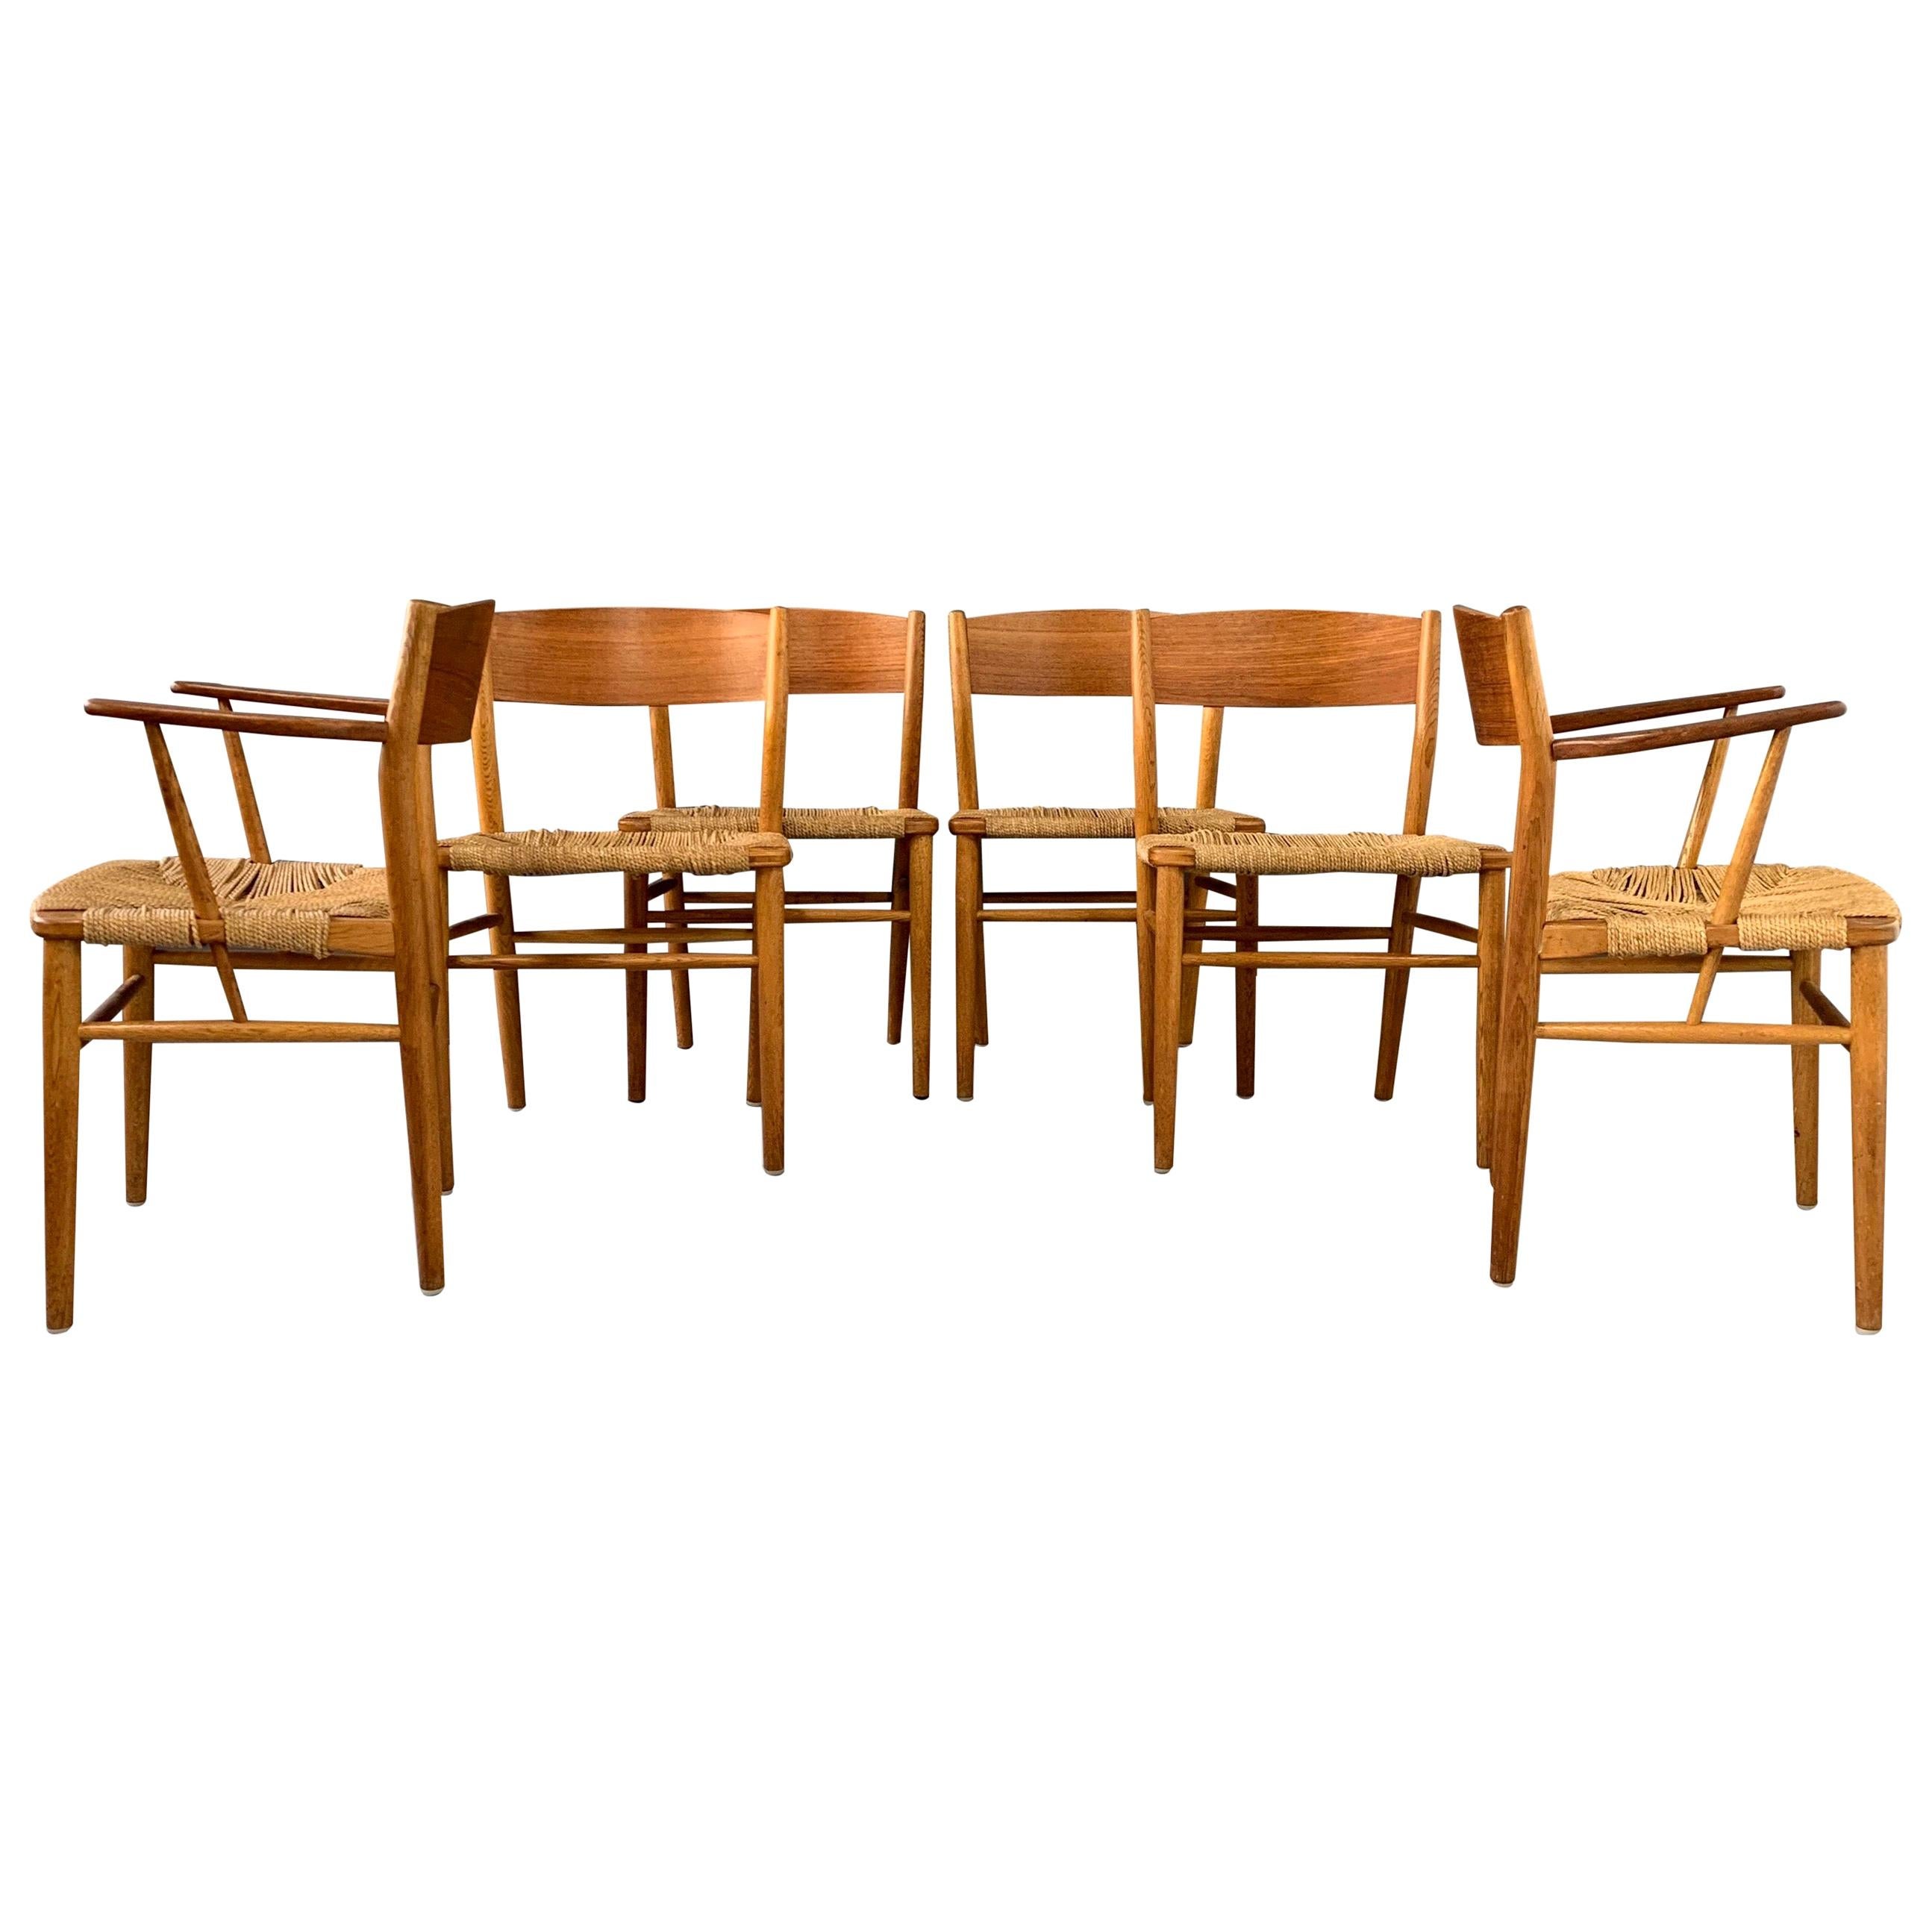 Børge Mogensen Dining Chairs by Søborg Møbelfabrik in Denmark Midcentury